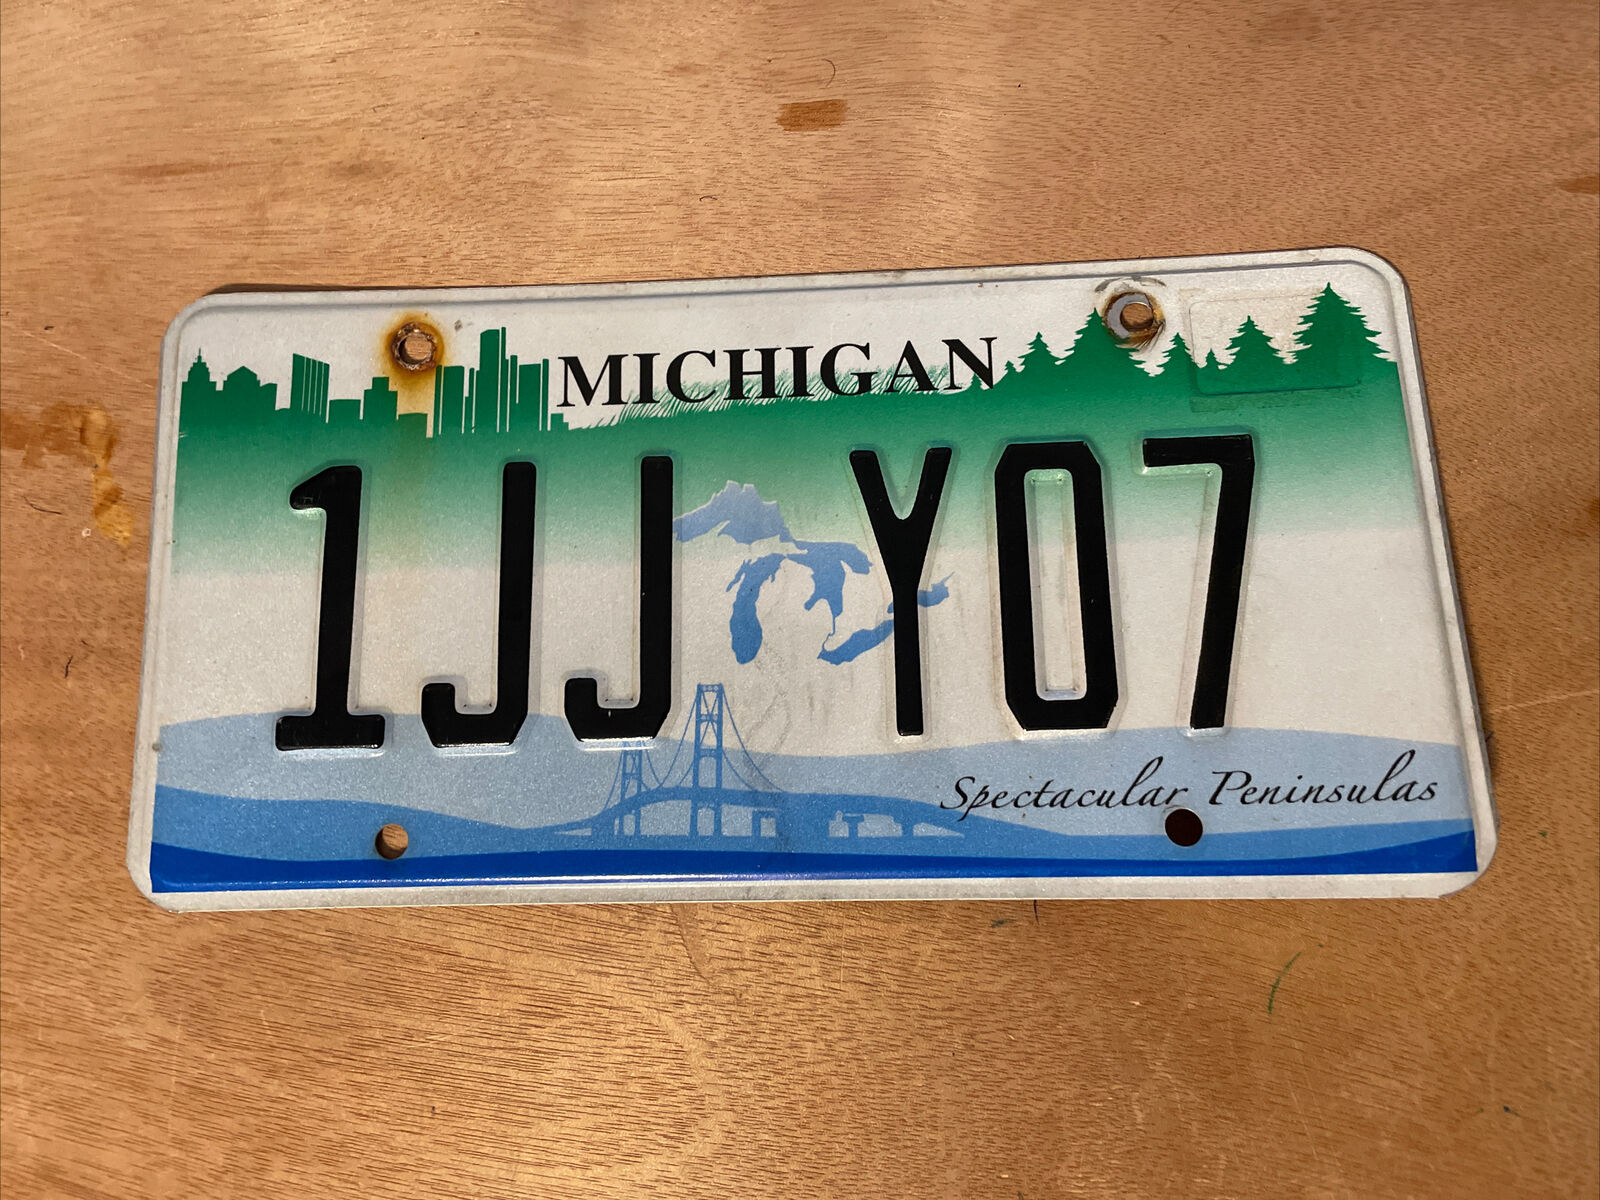 2007 Base Michigan “spectacular Peninsulas” License Plate # 1jj Y07